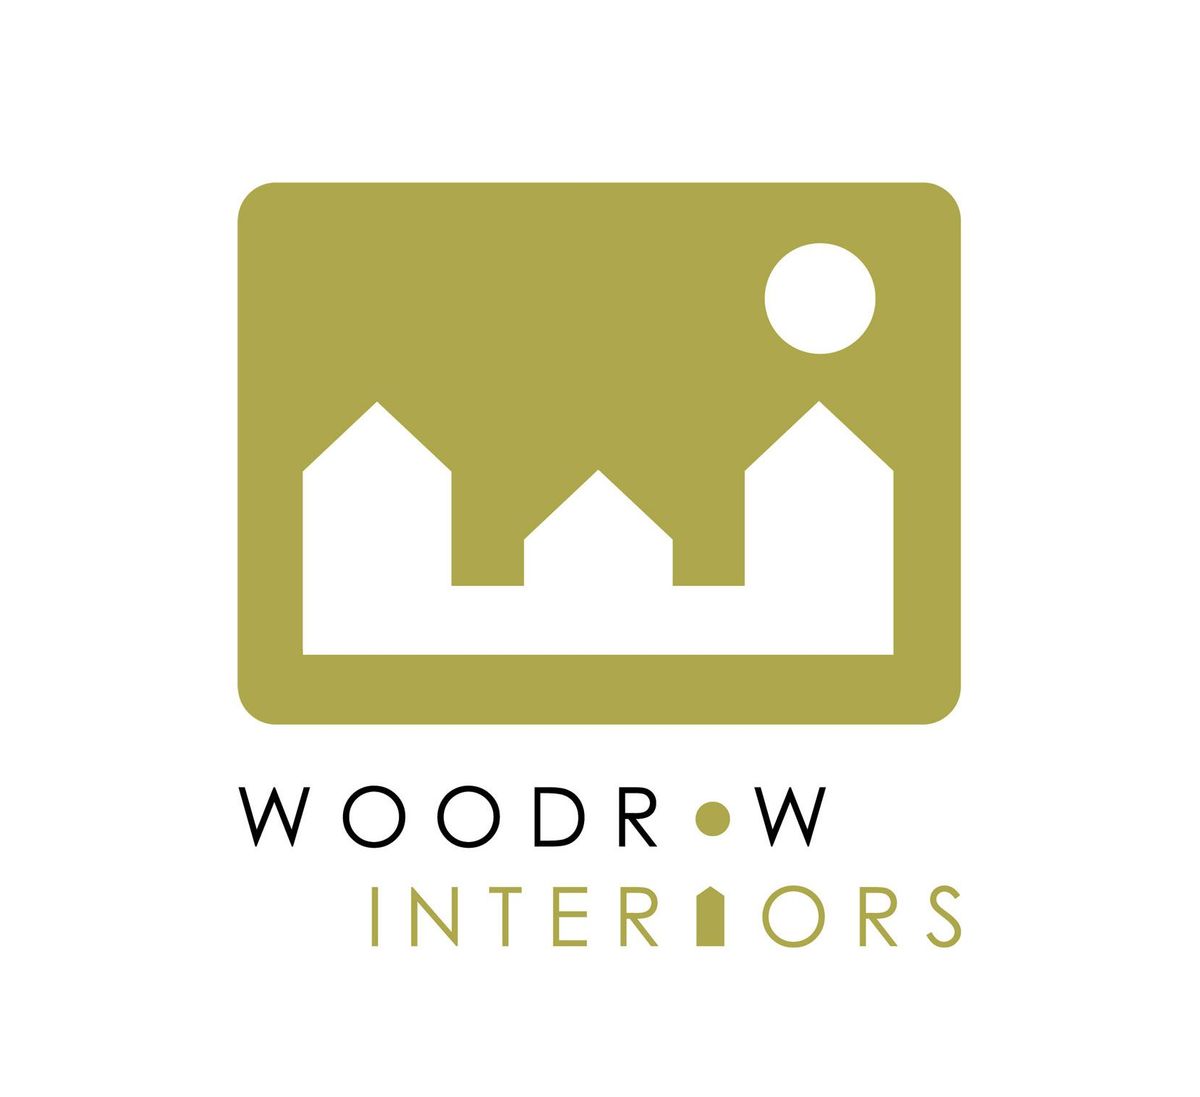 big logo of Woodrow interiors